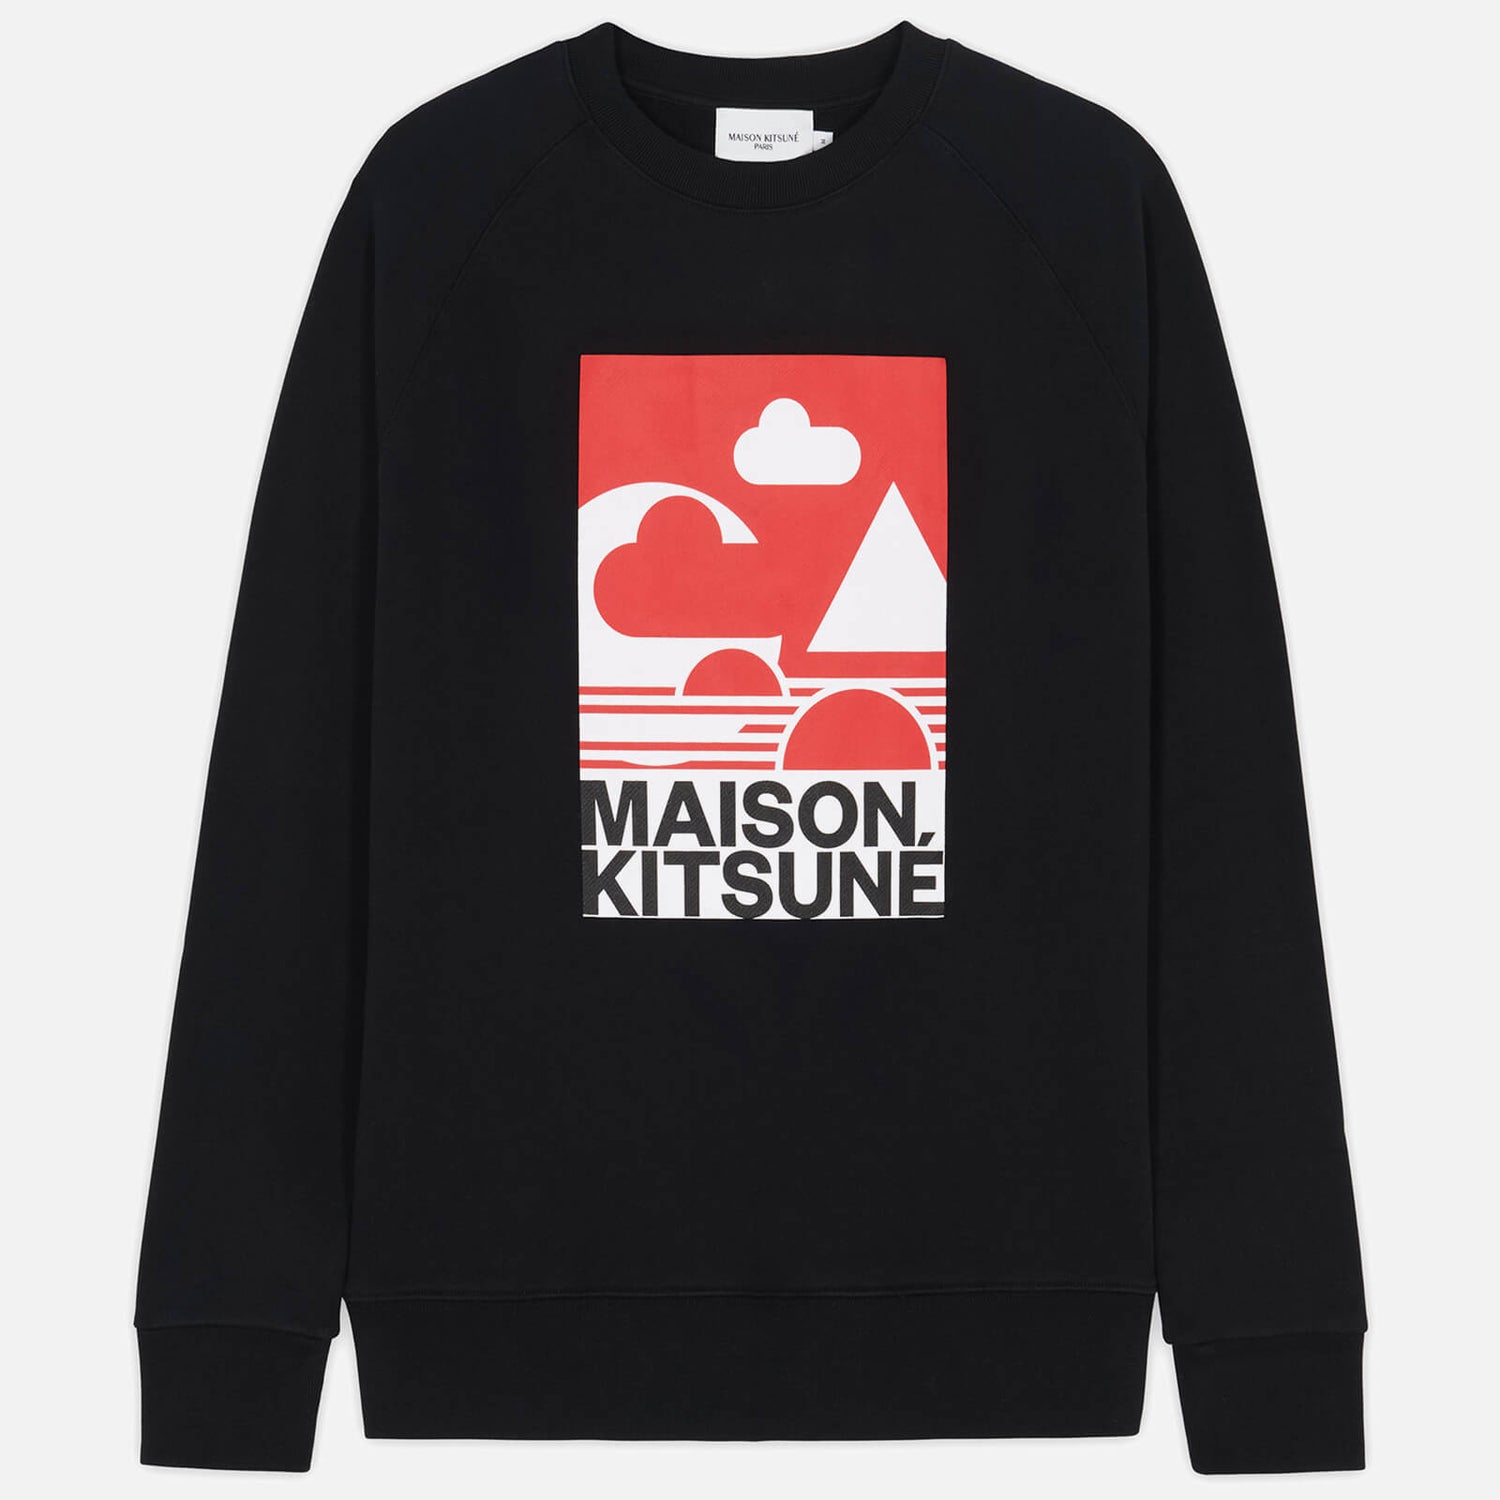 Maison Kitsuné Men's Red Anthony Burrill Sweatshirt - Black - S